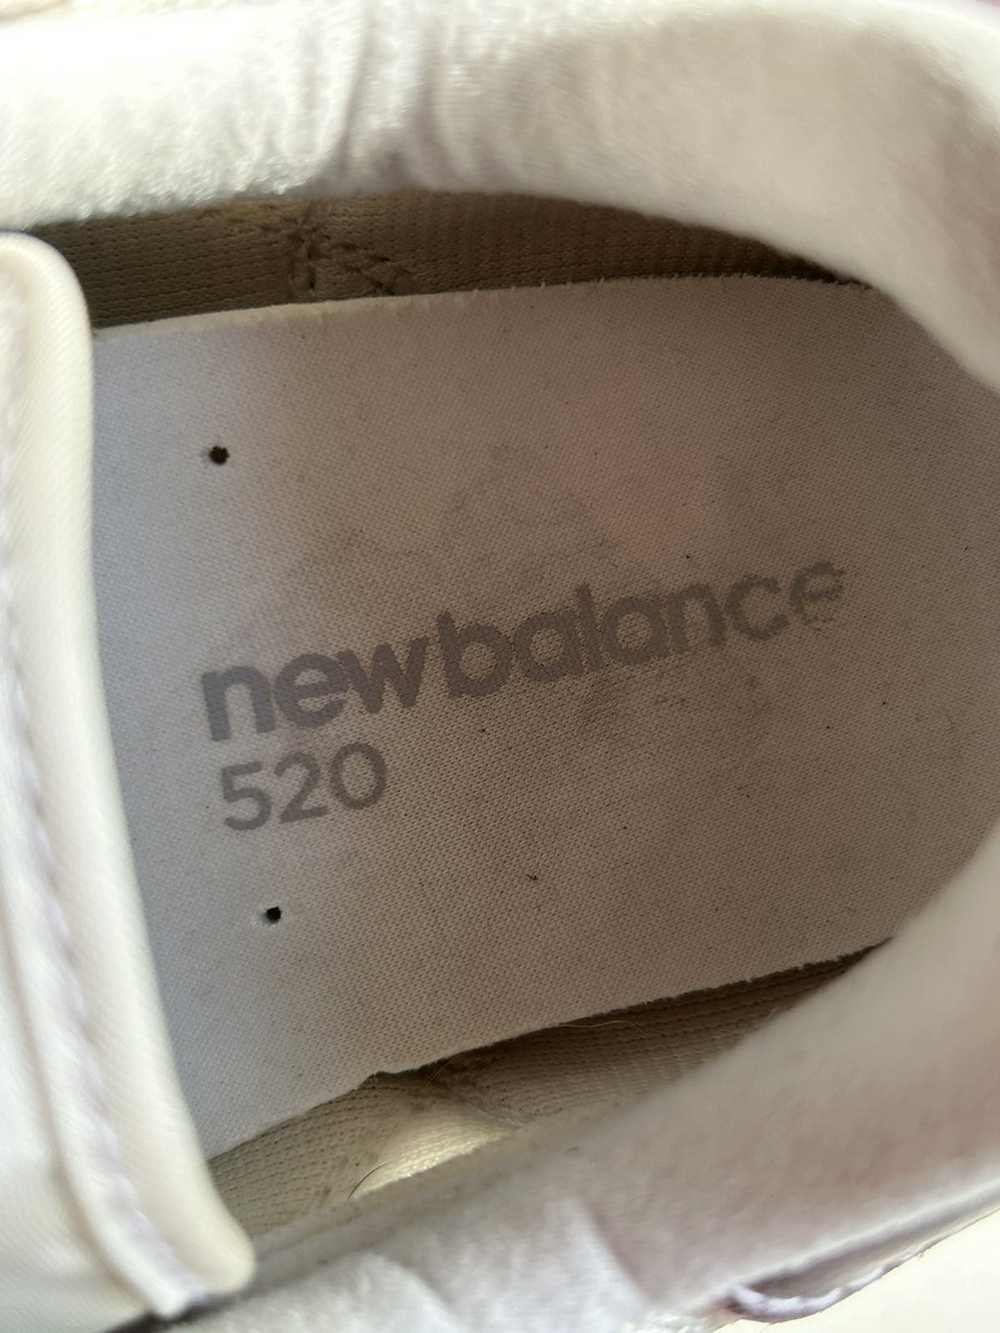 New Balance New Balance 520 - Suede Upper - image 10